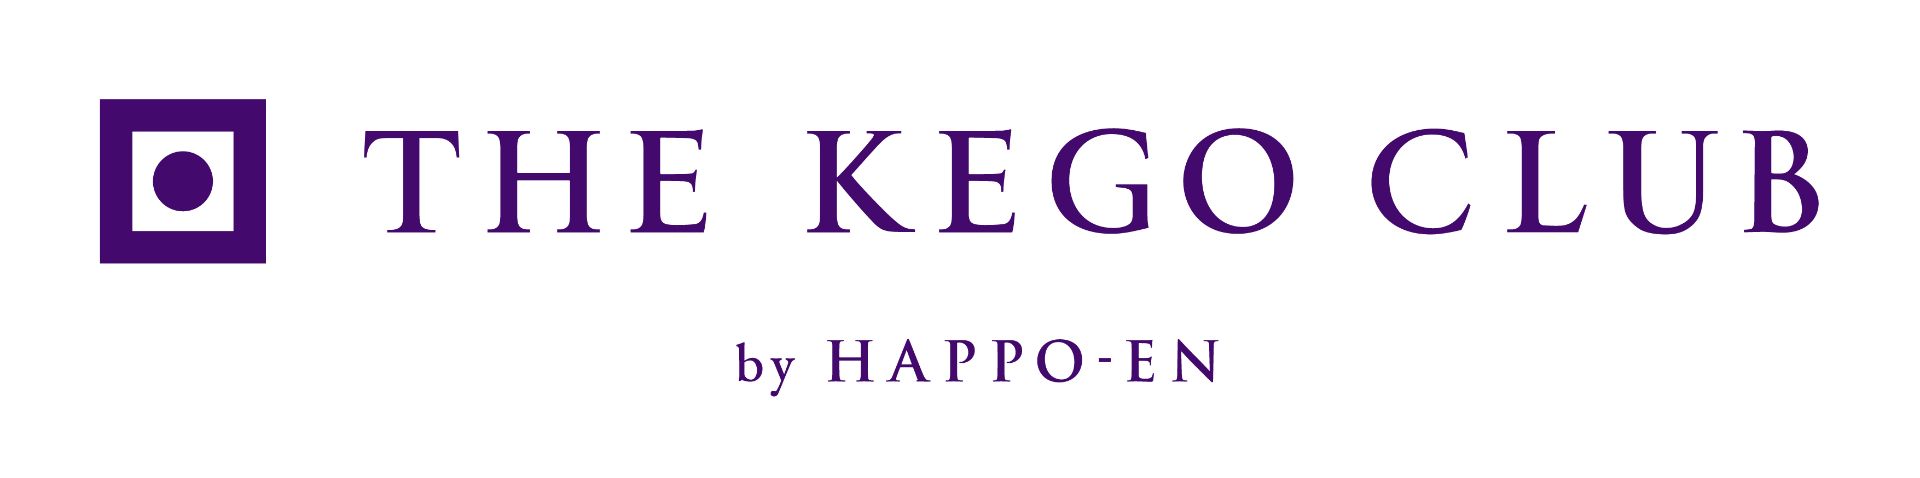 THE KEGO CLUB by HAPPO-EN